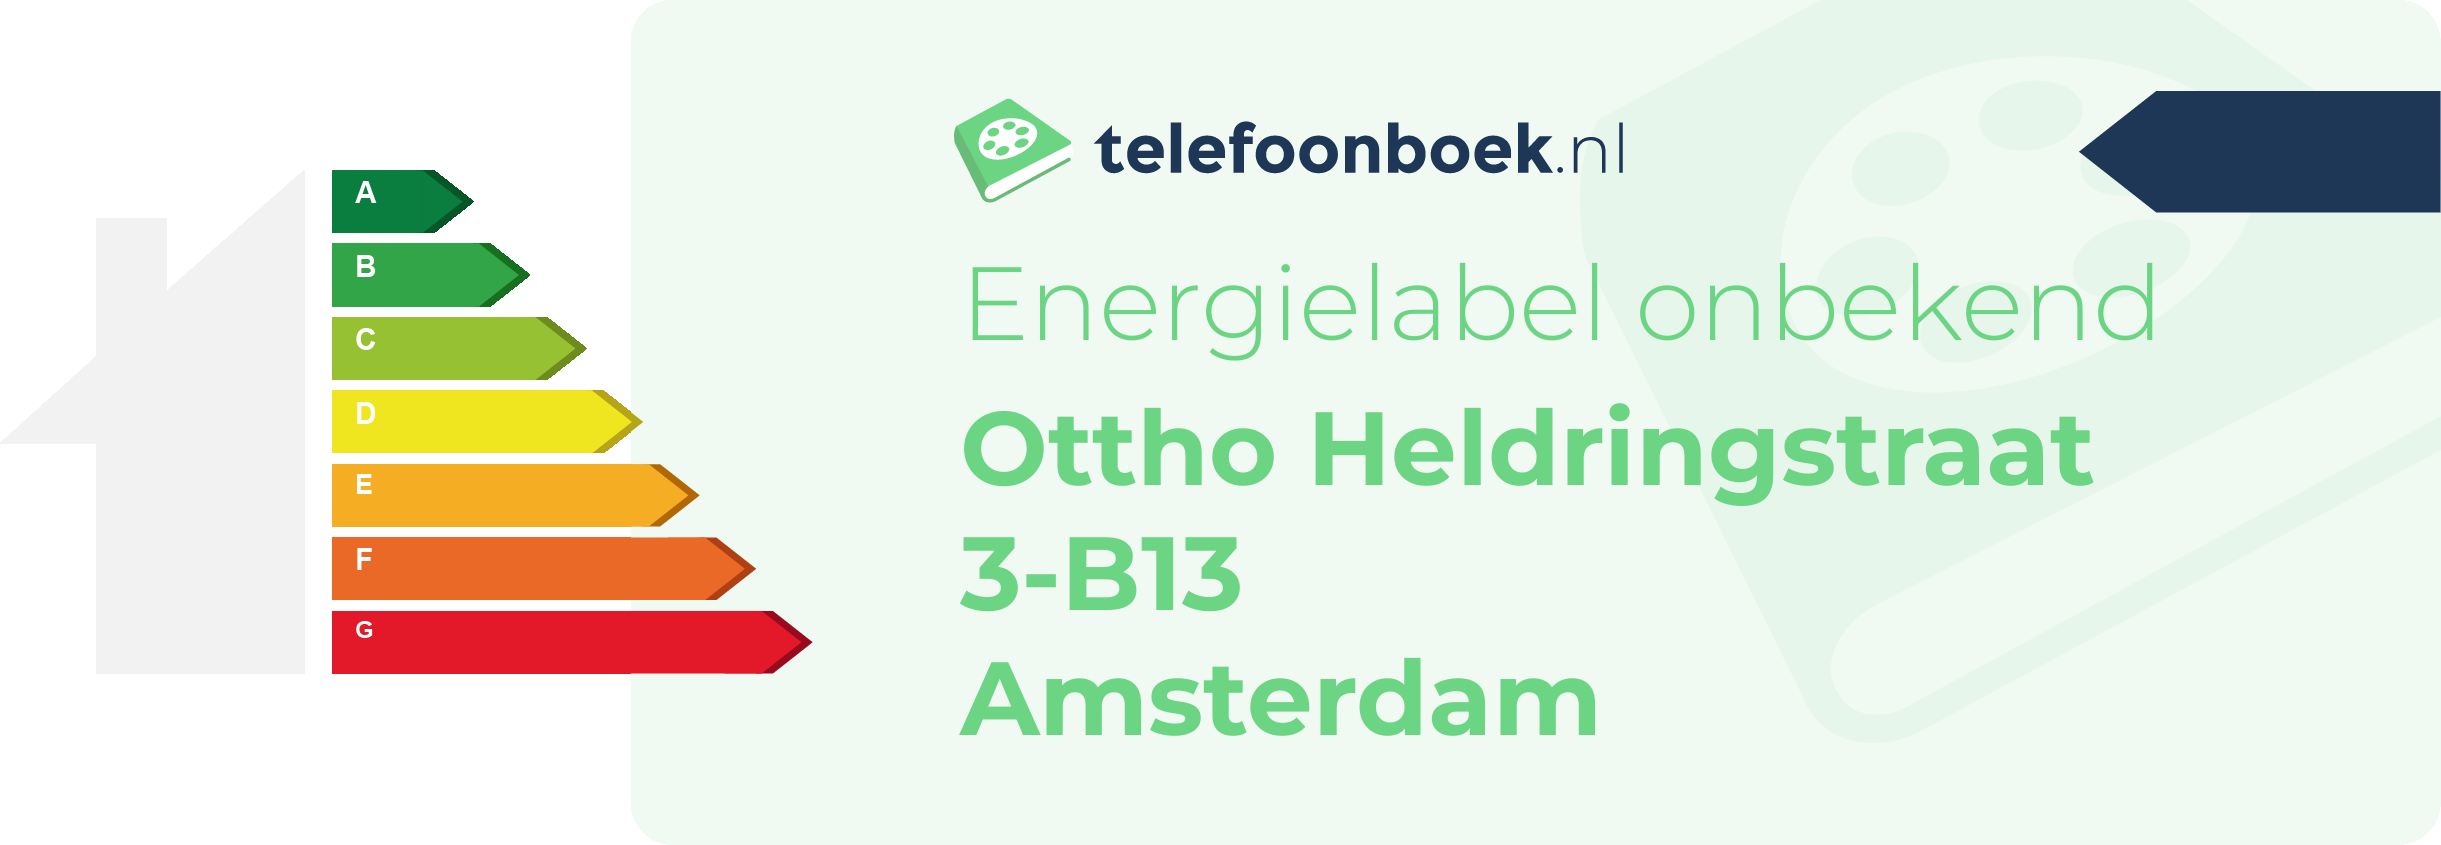 Energielabel Ottho Heldringstraat 3-B13 Amsterdam